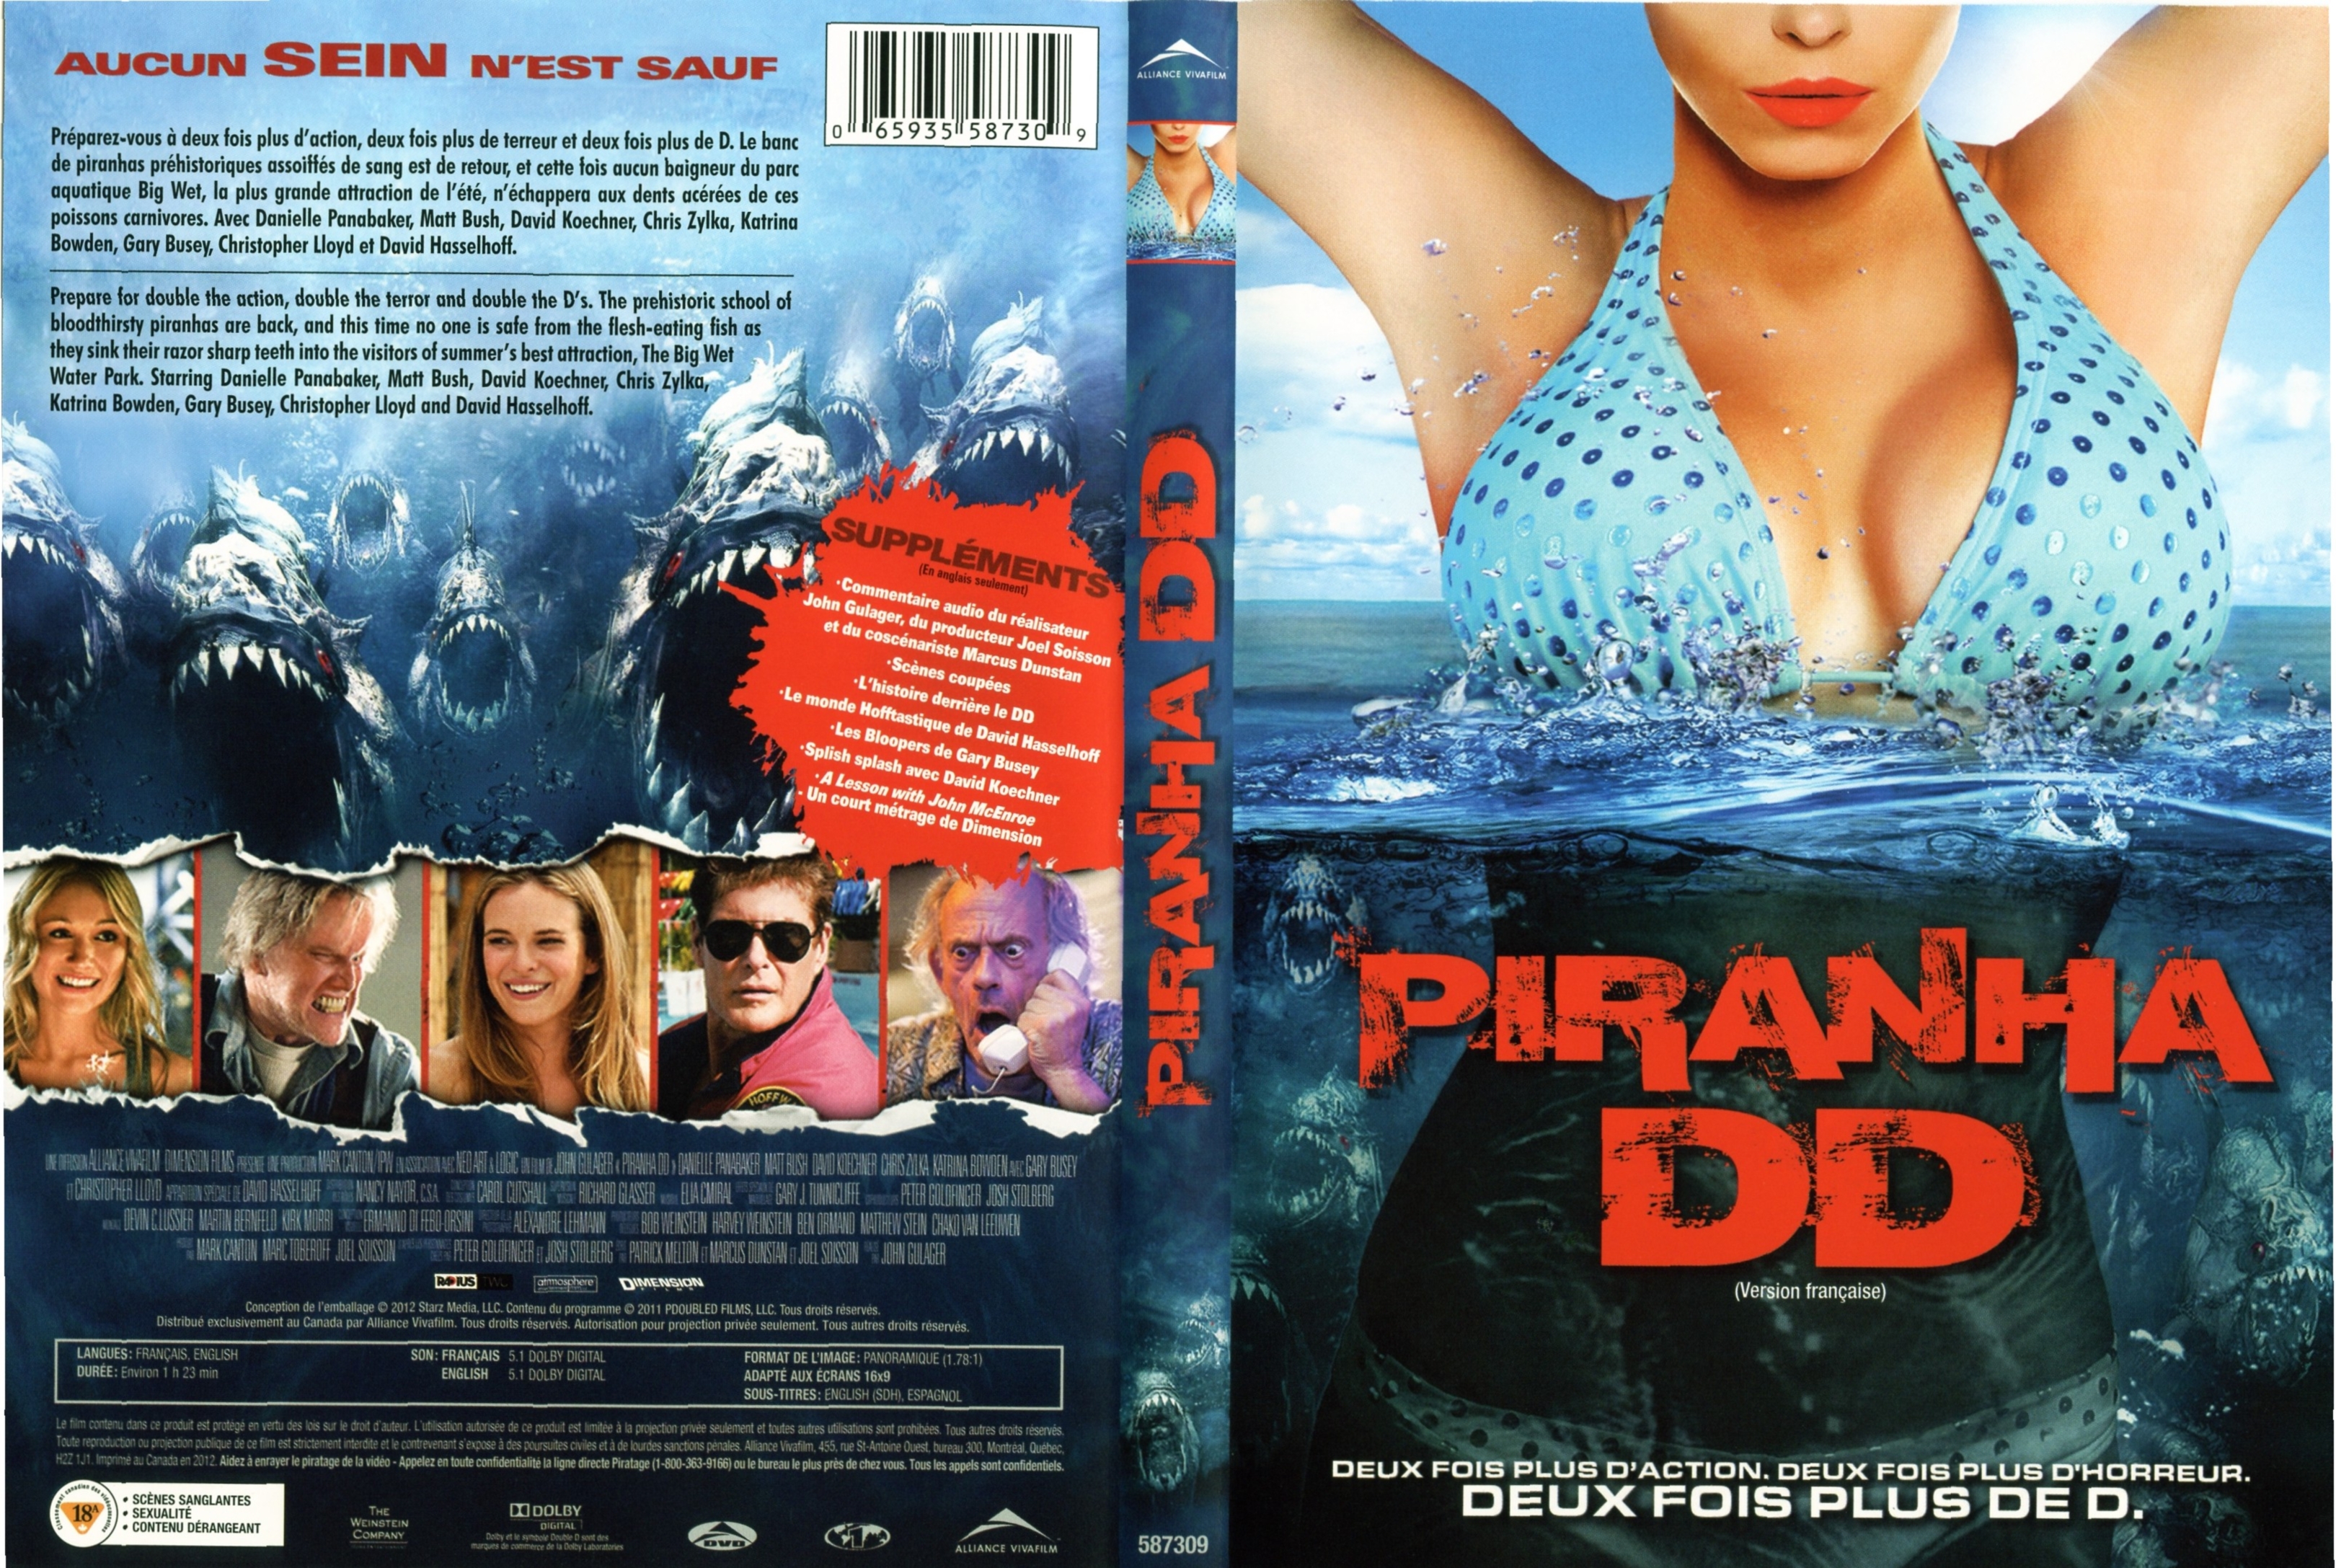 Jaquette DVD Piranha DD (Canadienne)